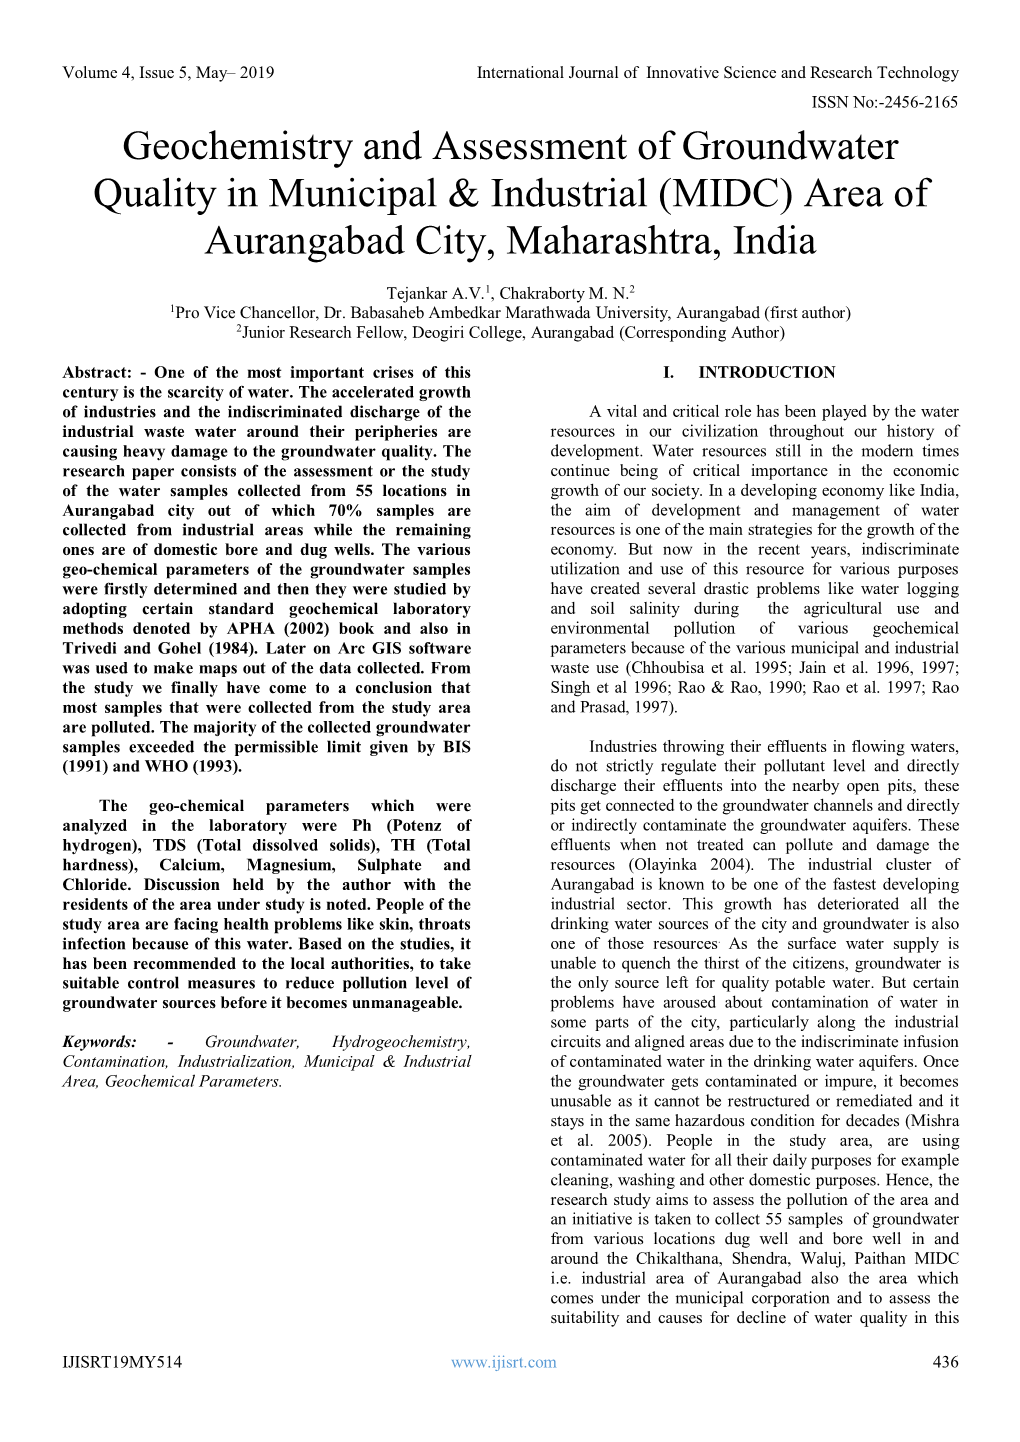 (MIDC) Area of Aurangabad City, Maharashtra, India